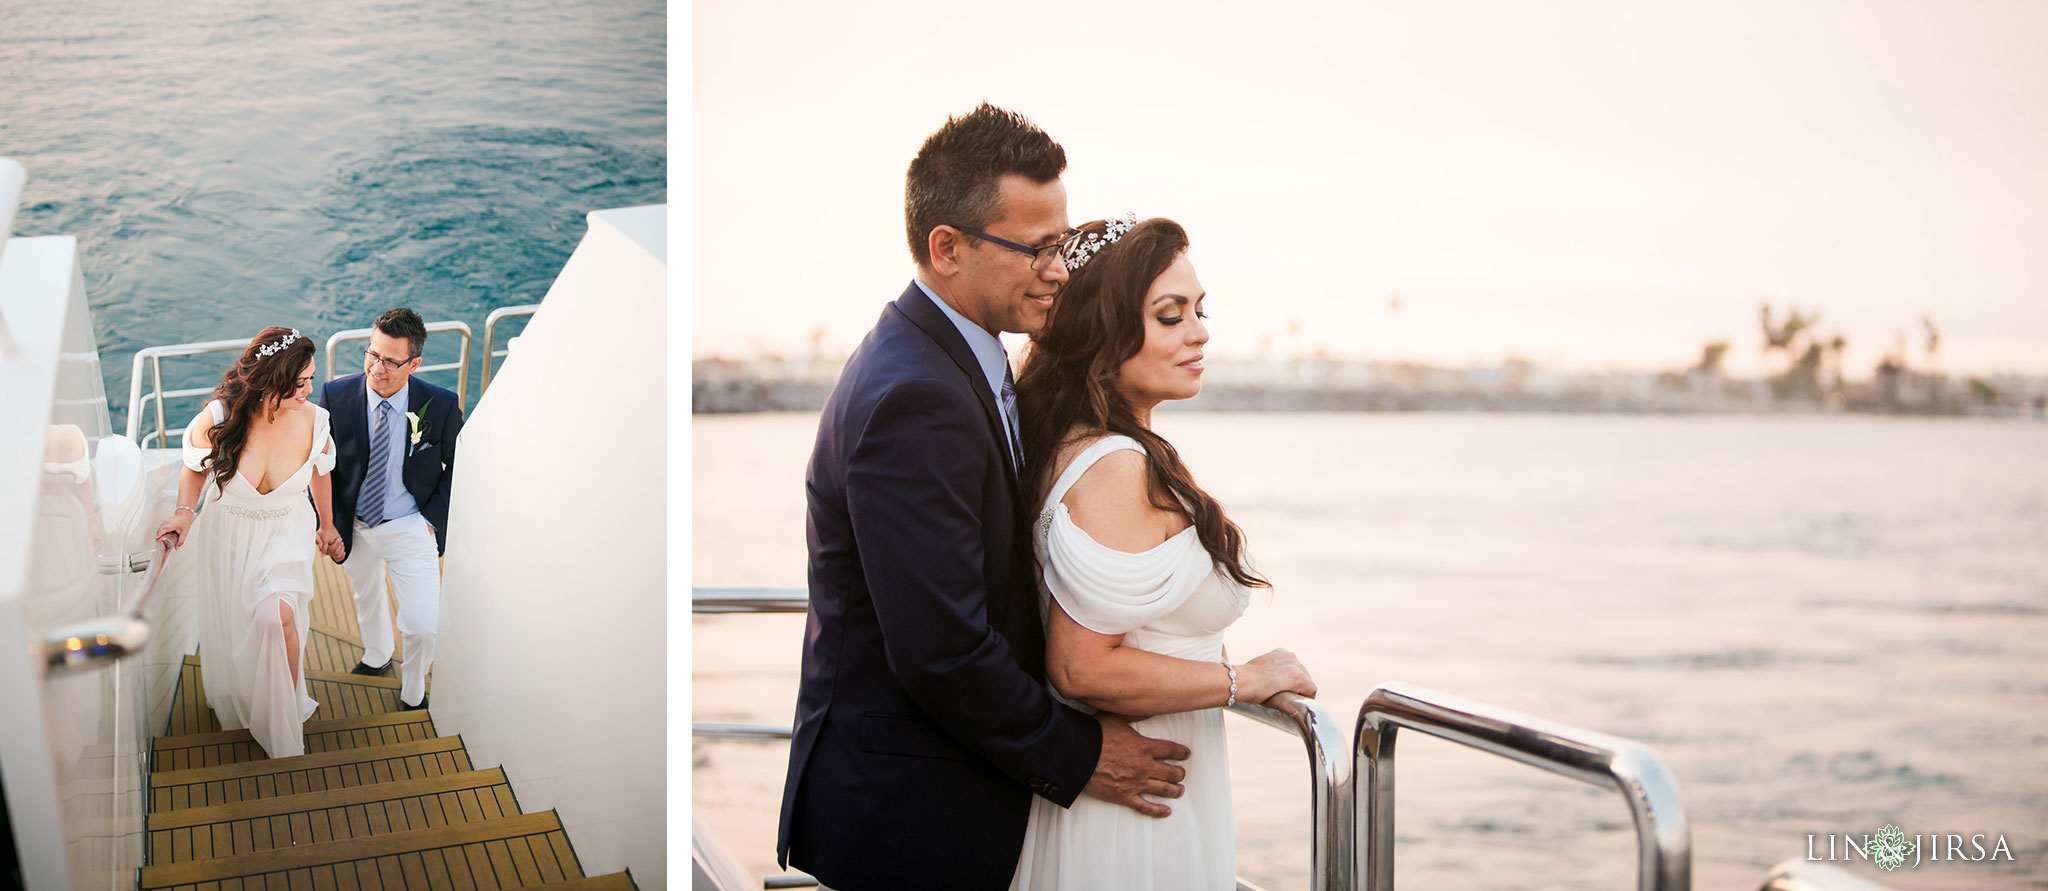 018 charter yachts newport beach wedding photography